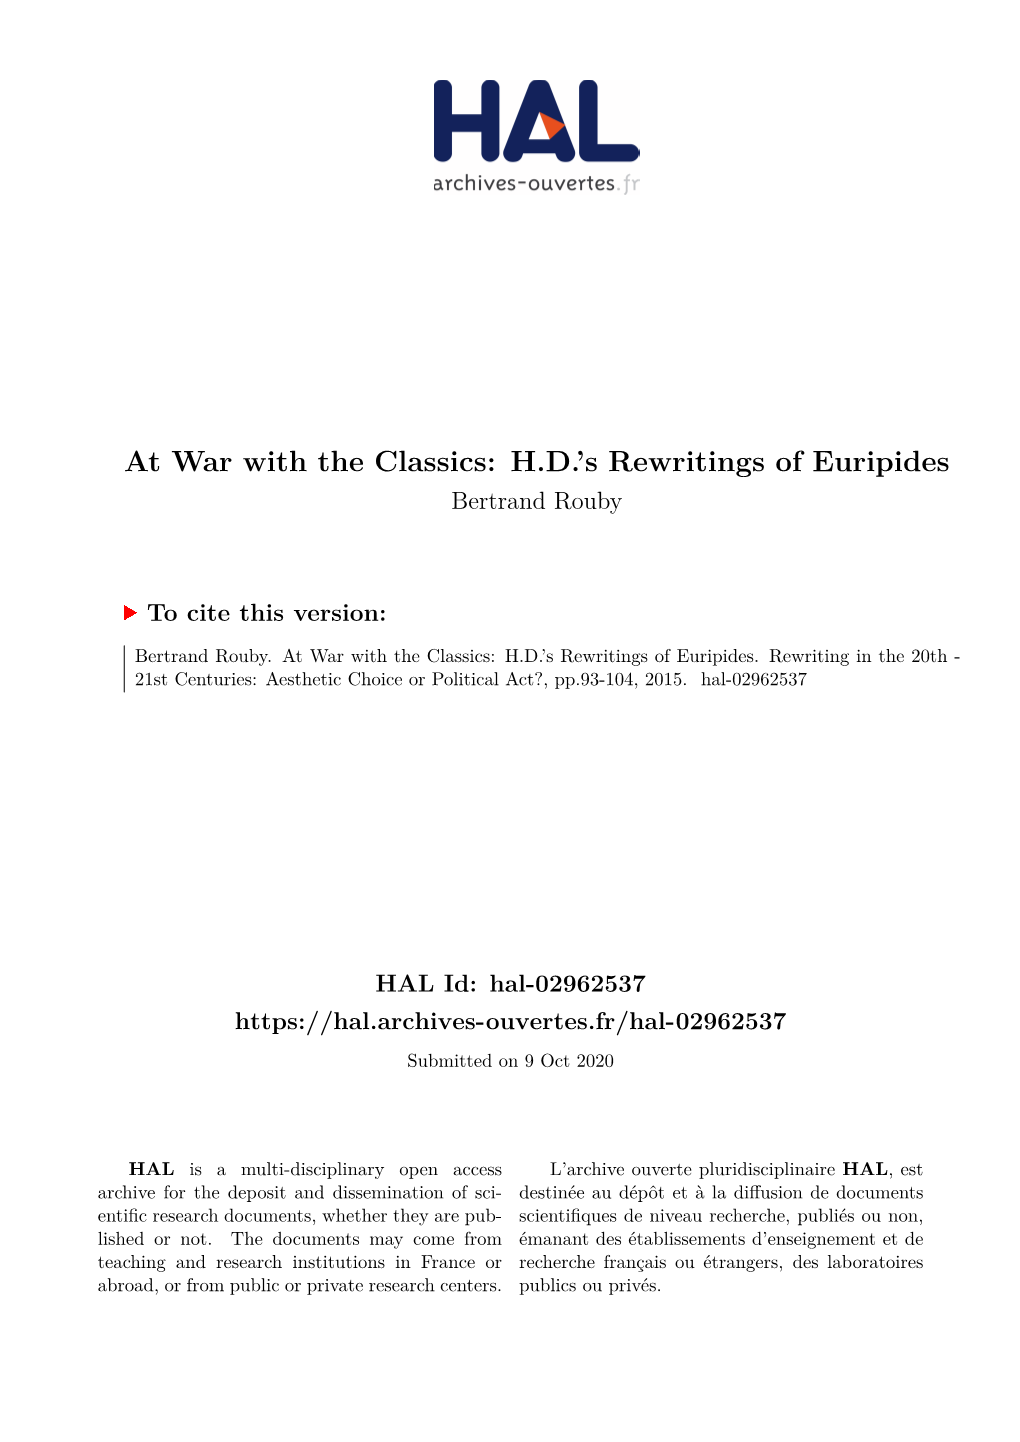 HD's Rewritings of Euripides